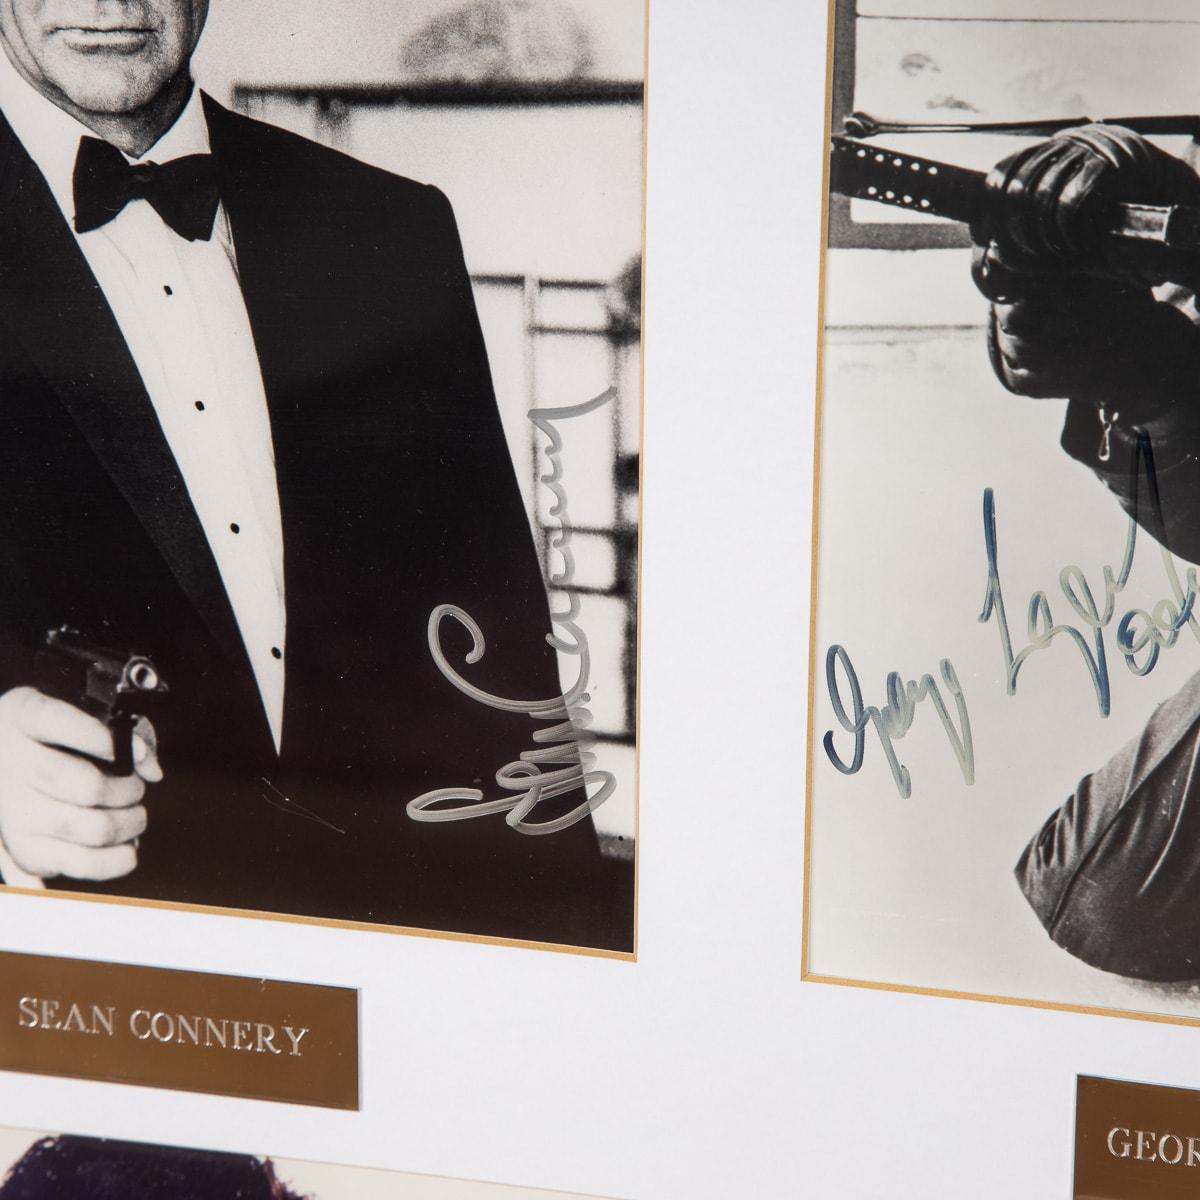 James Bond 007 - Connery, Lazenby, Moore, Dalton, Brosnan, Craig Signatures 1